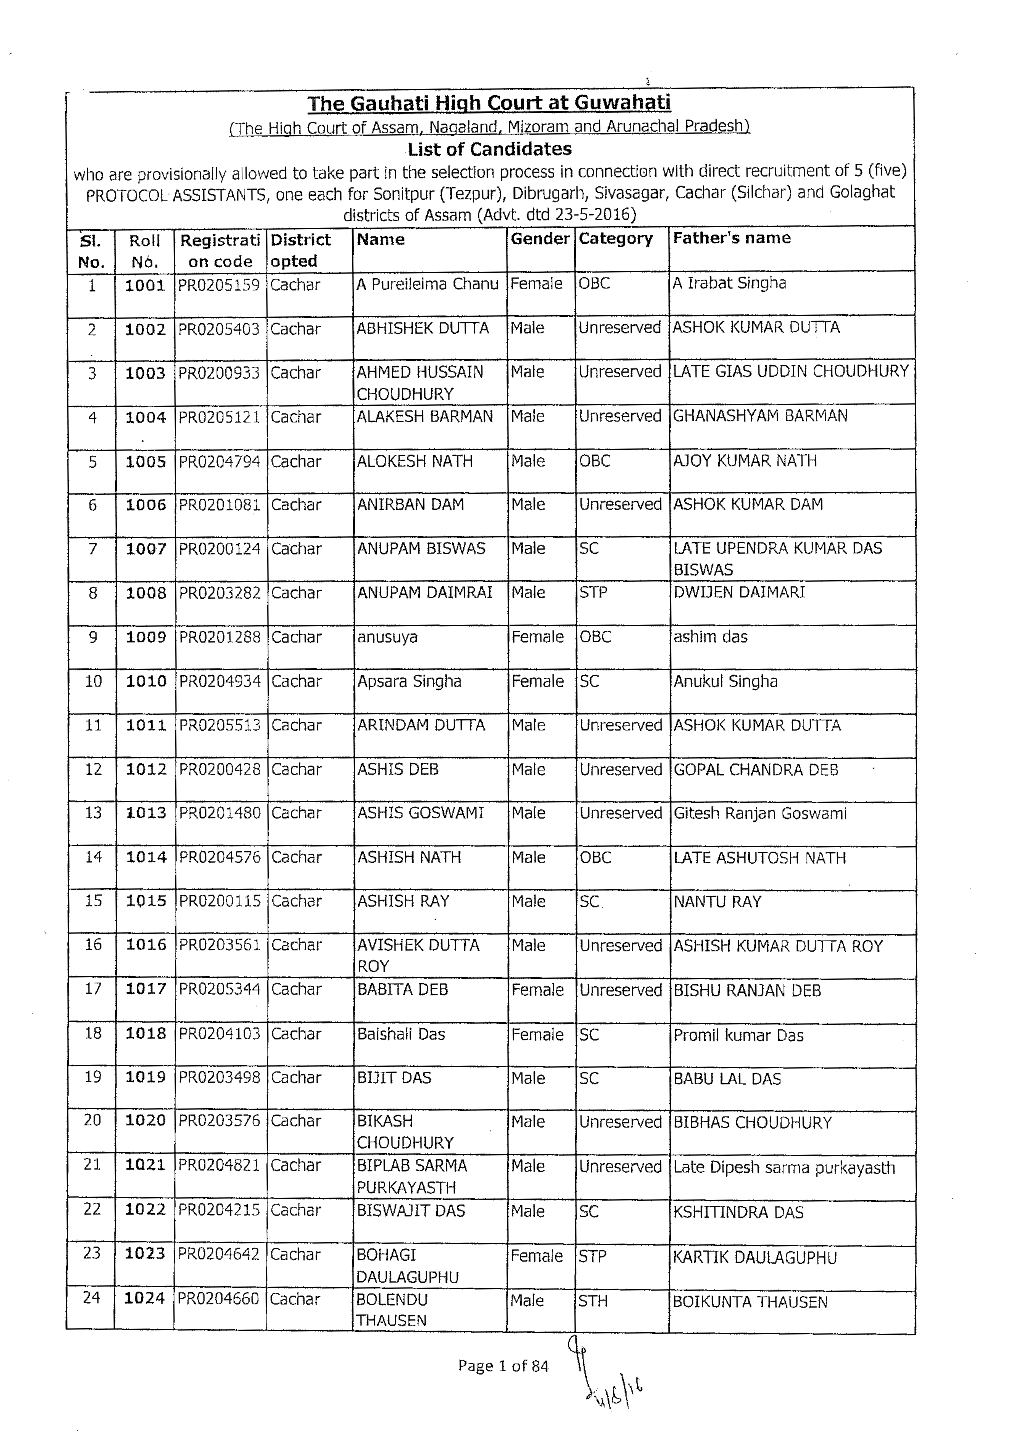 The Gauhati High Court at Guwahati List of Candidates